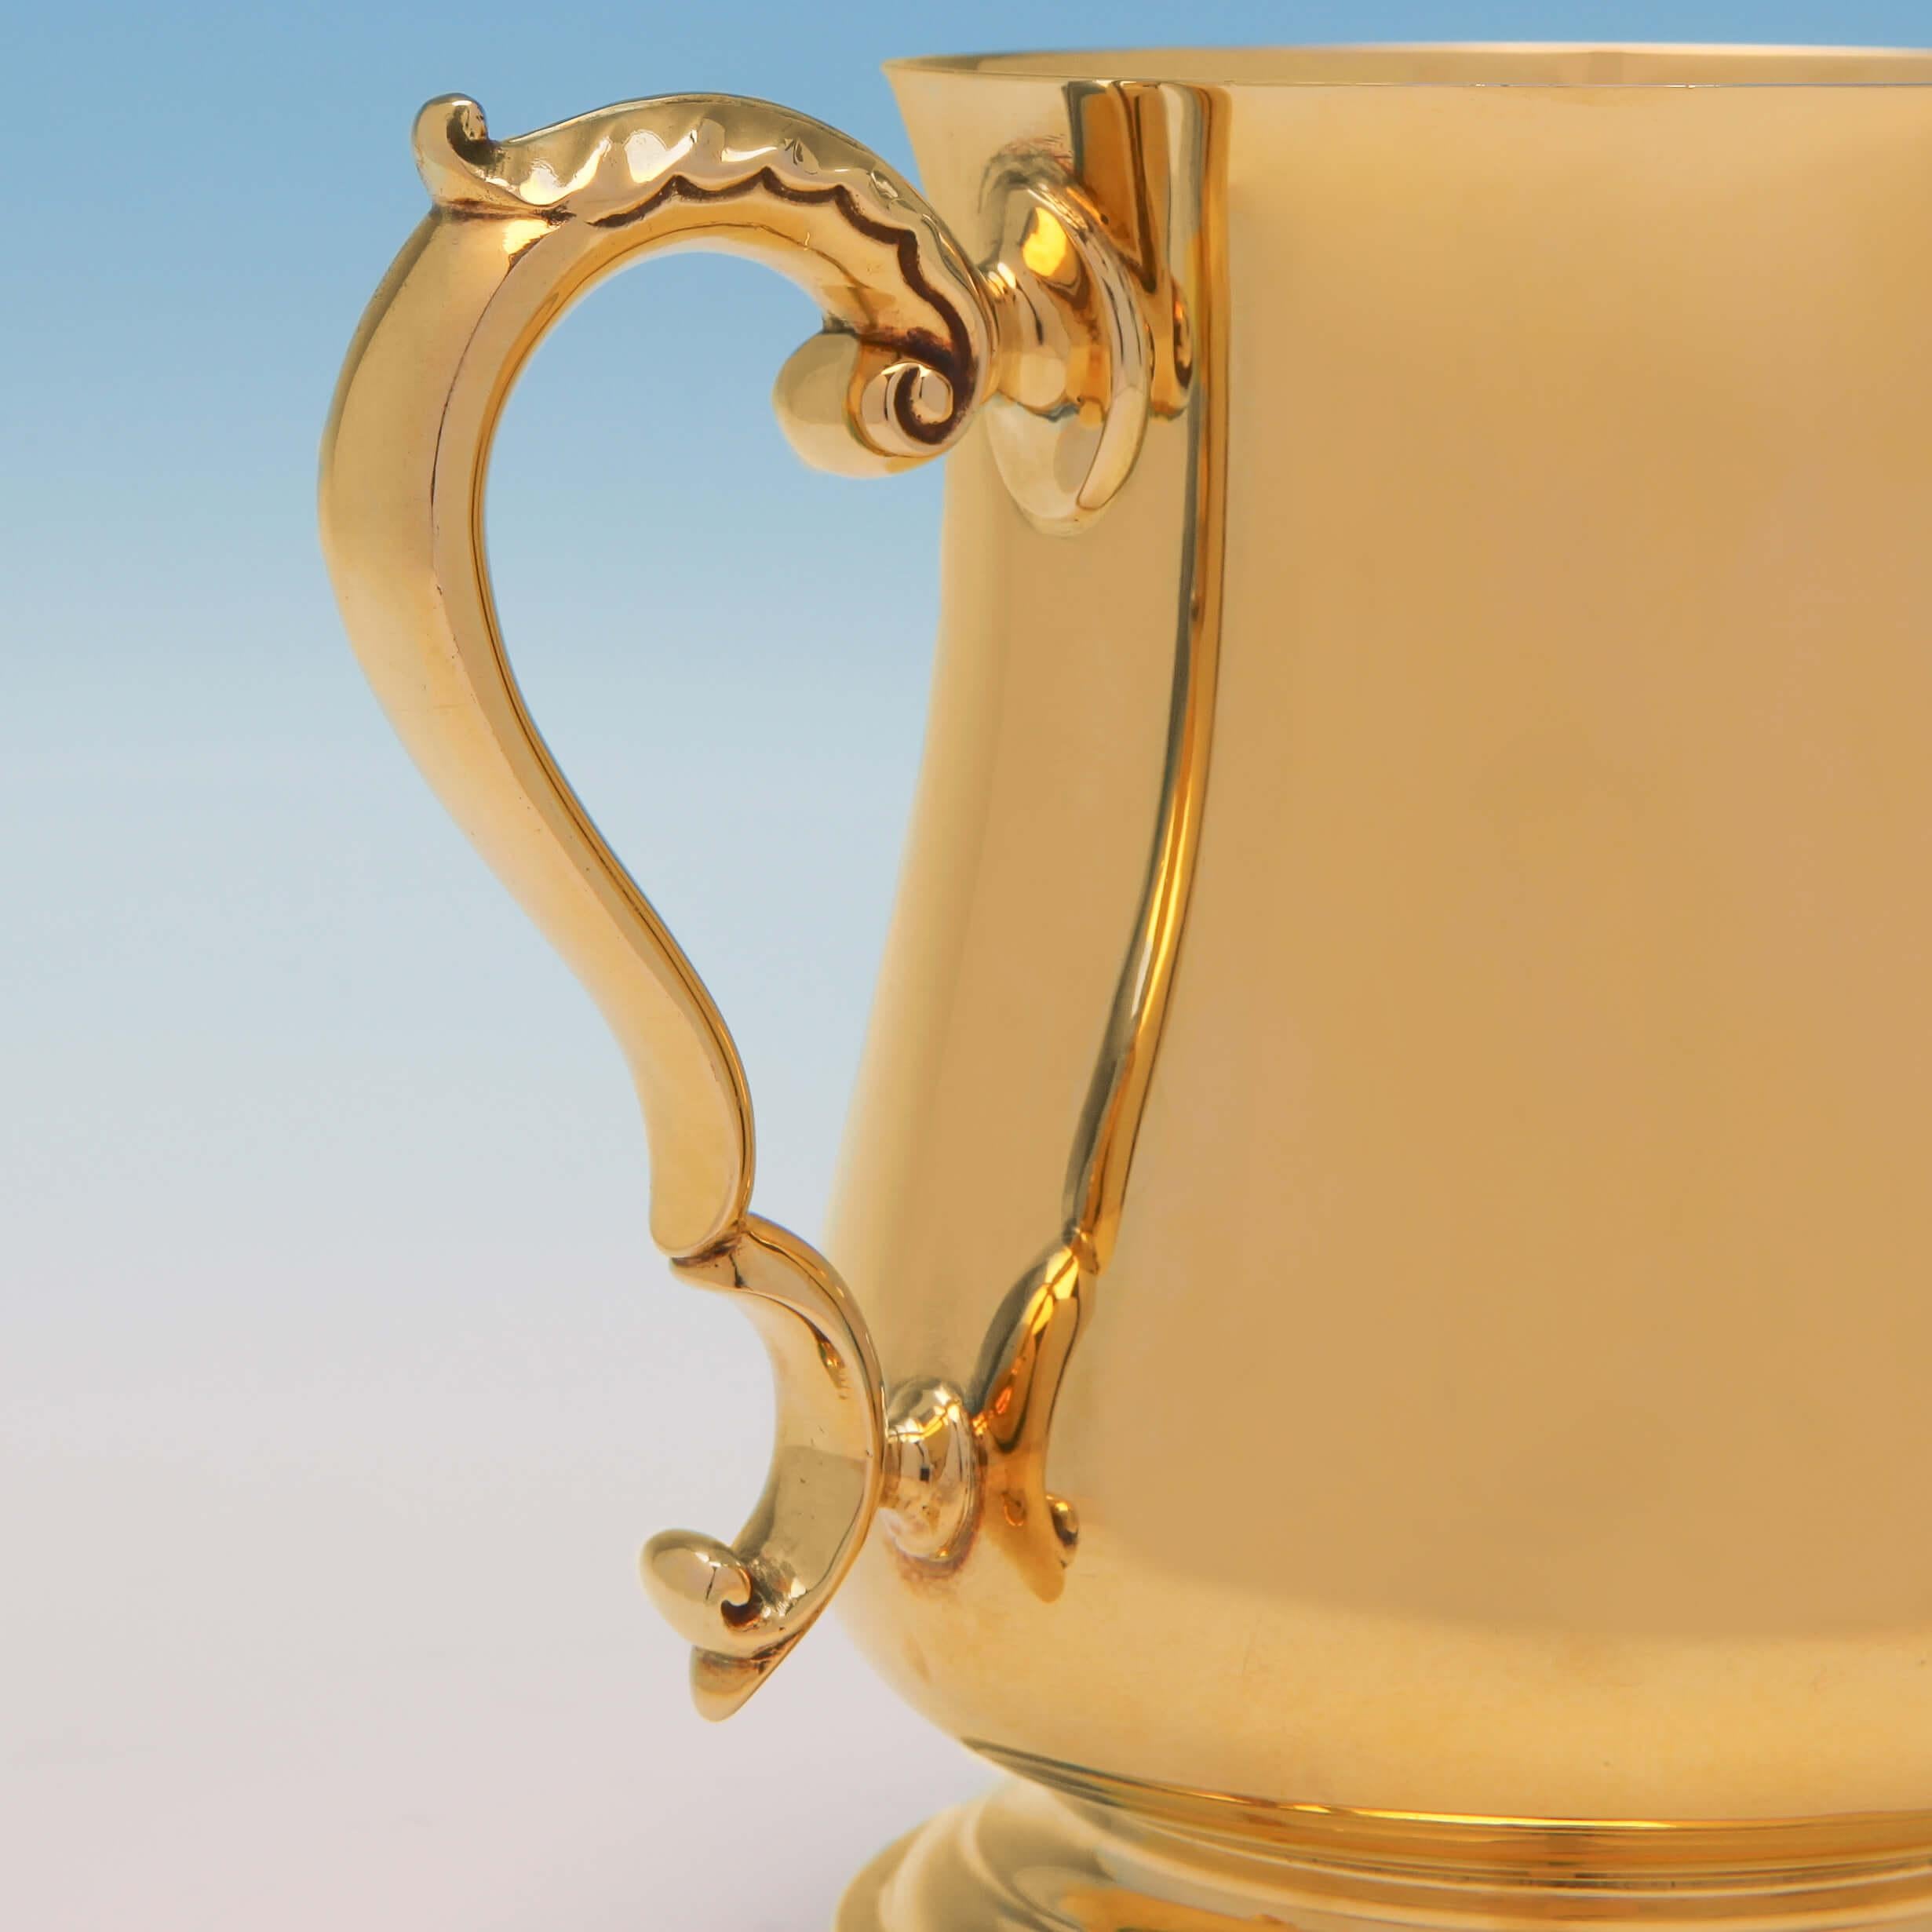 English Modern 18-Carat Gold Pint Mug in the George III Style by Prestons Ltd in 1968